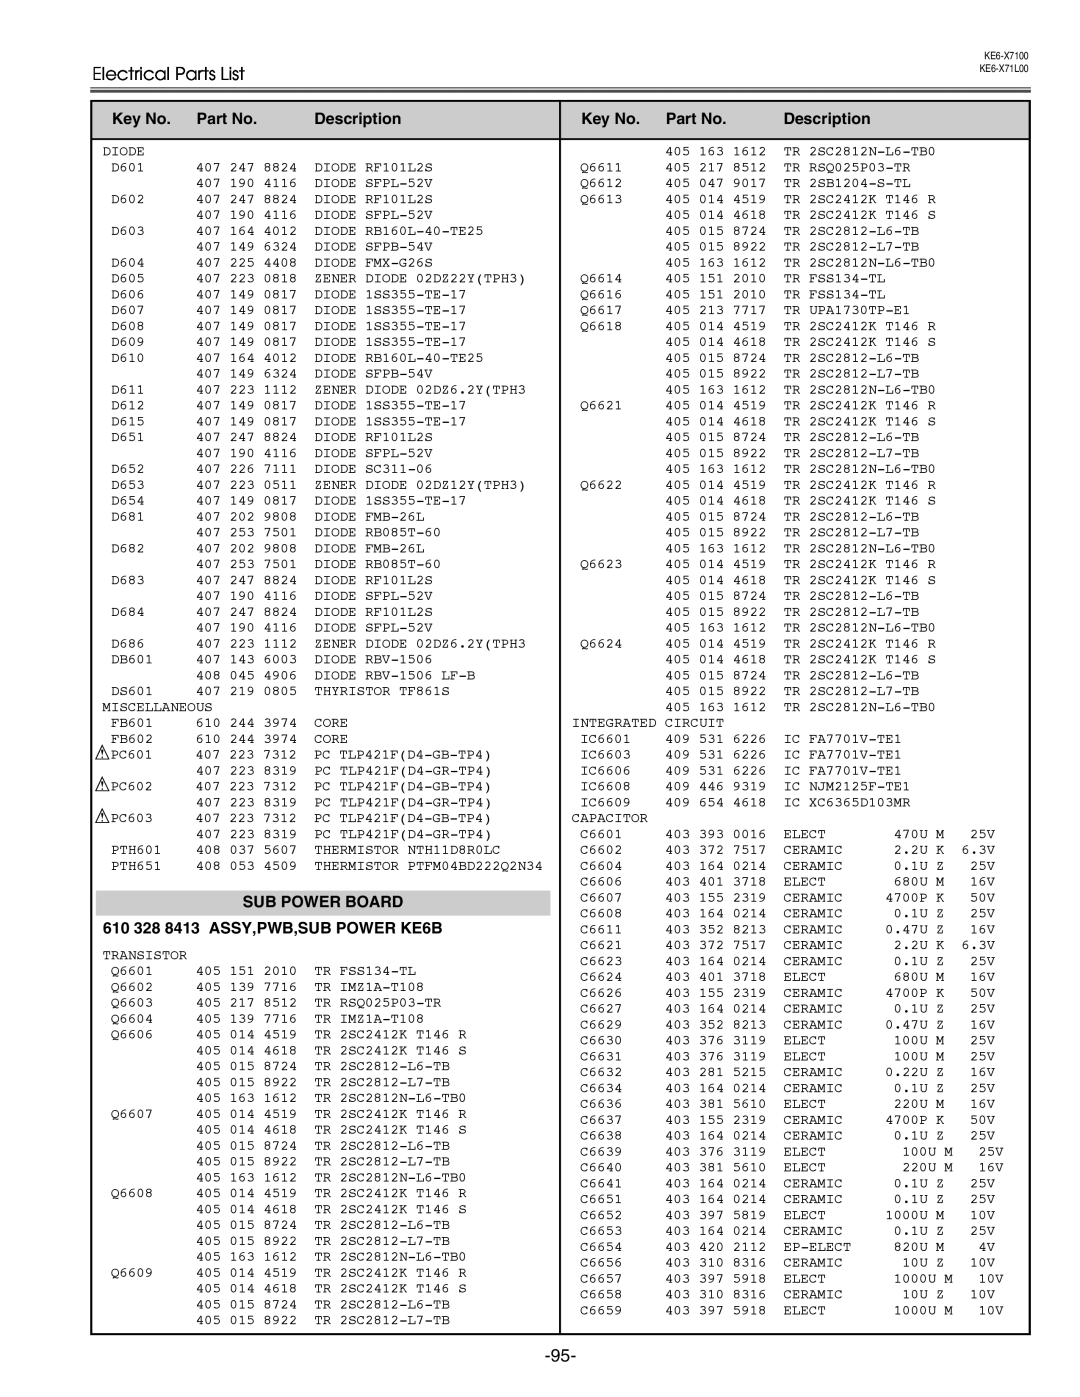 Eiki LC-X71 LC-X71L Electrical Parts List, Description, Sub Power Board, 610 328 8413 ASSY,PWB,SUB POWER KE6B 